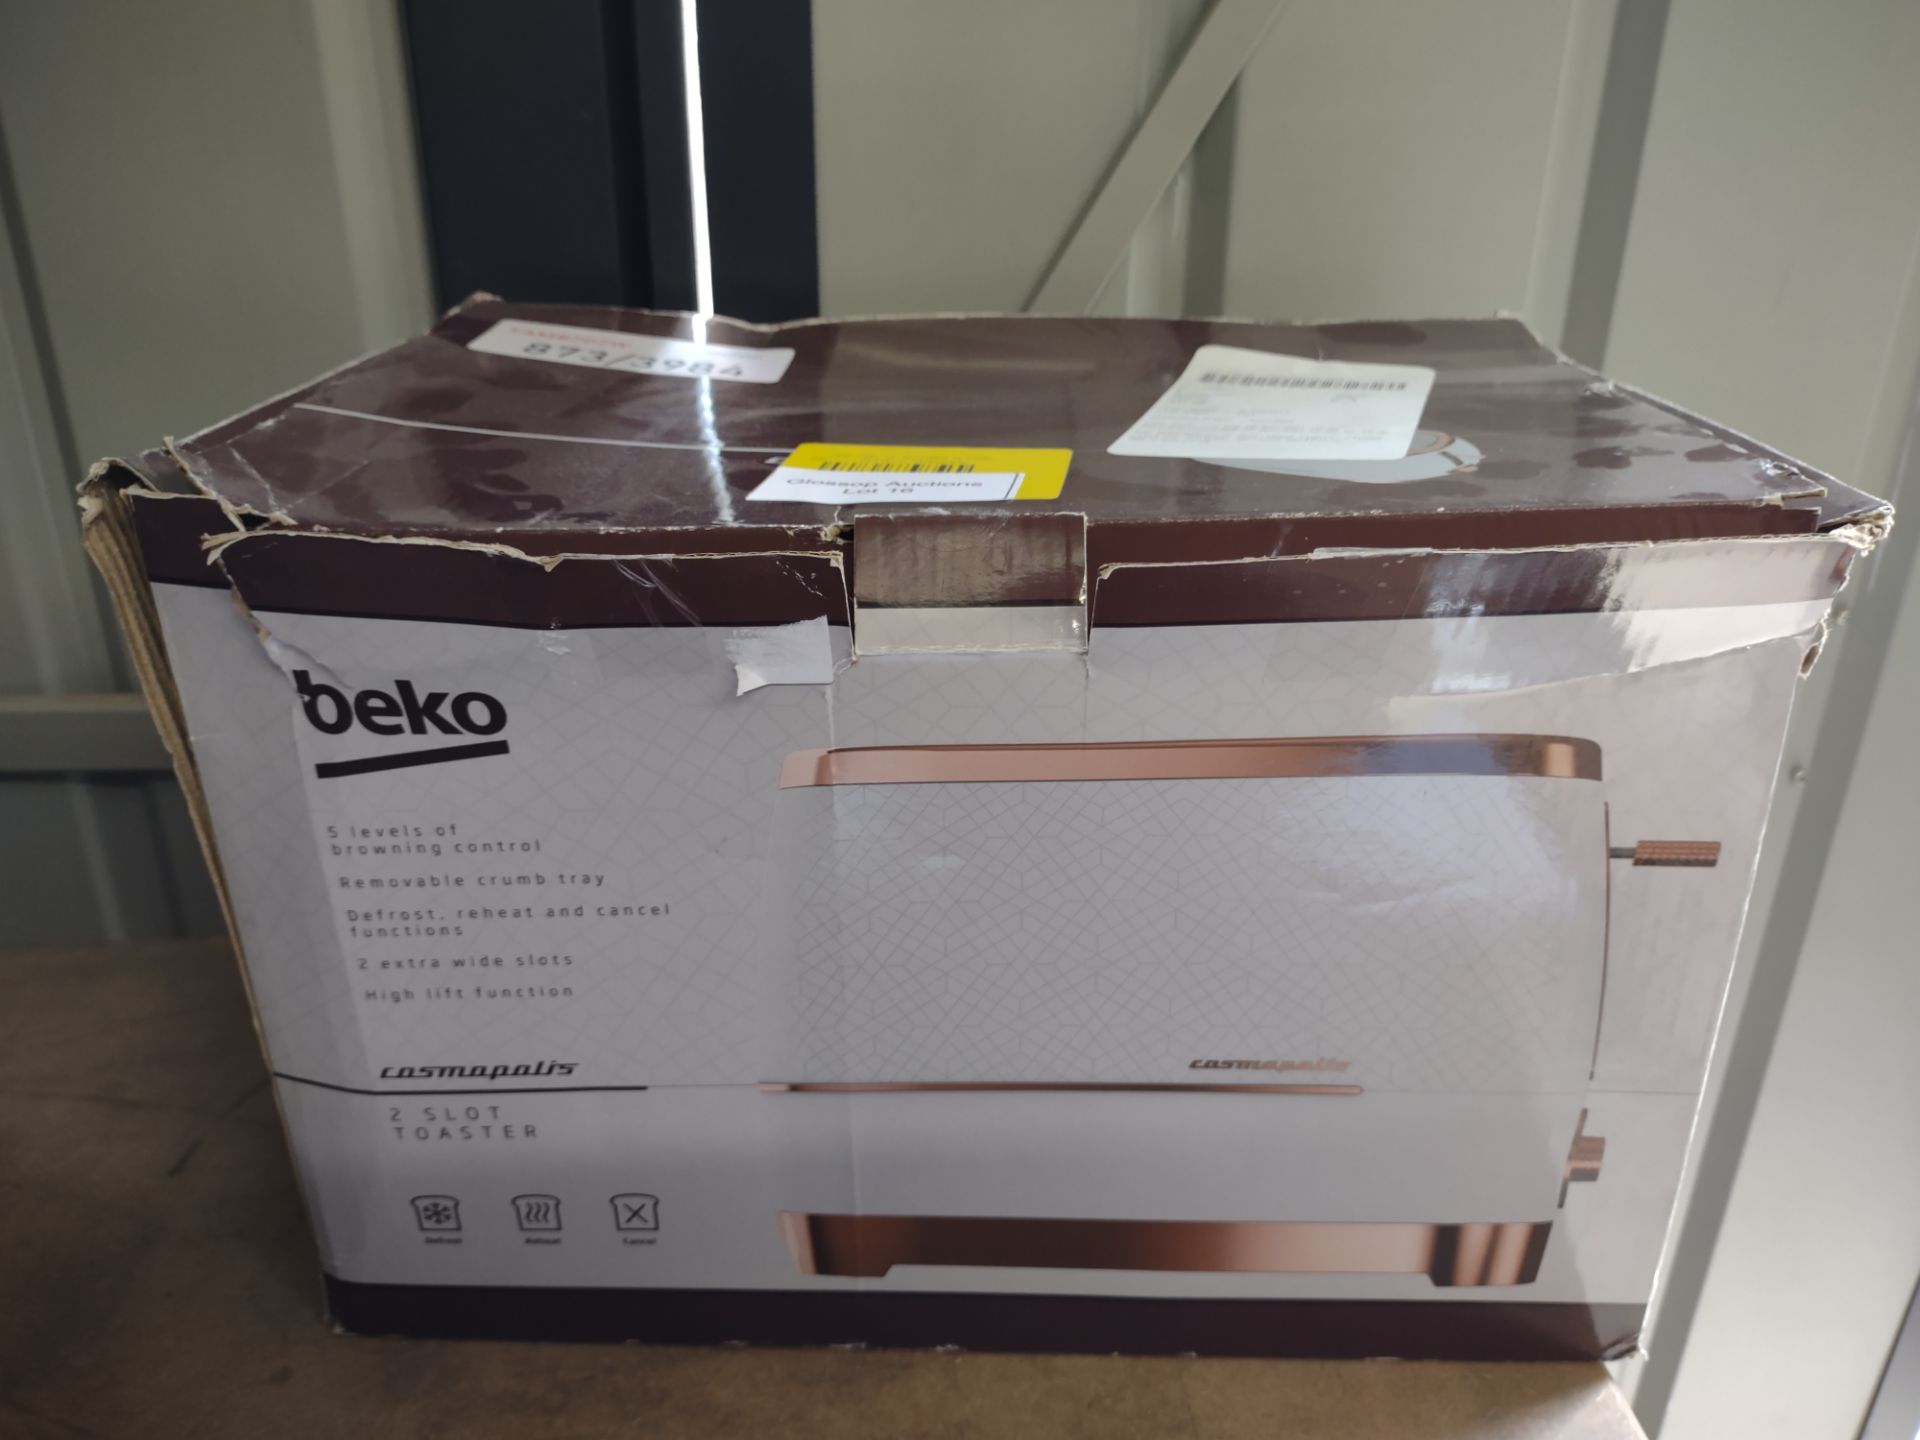 Beko Cosmopolis Toaster TAM8202W, Retro White Rose Gold Design. RRP £49.99 - GRADE U Beko Cosmopolis